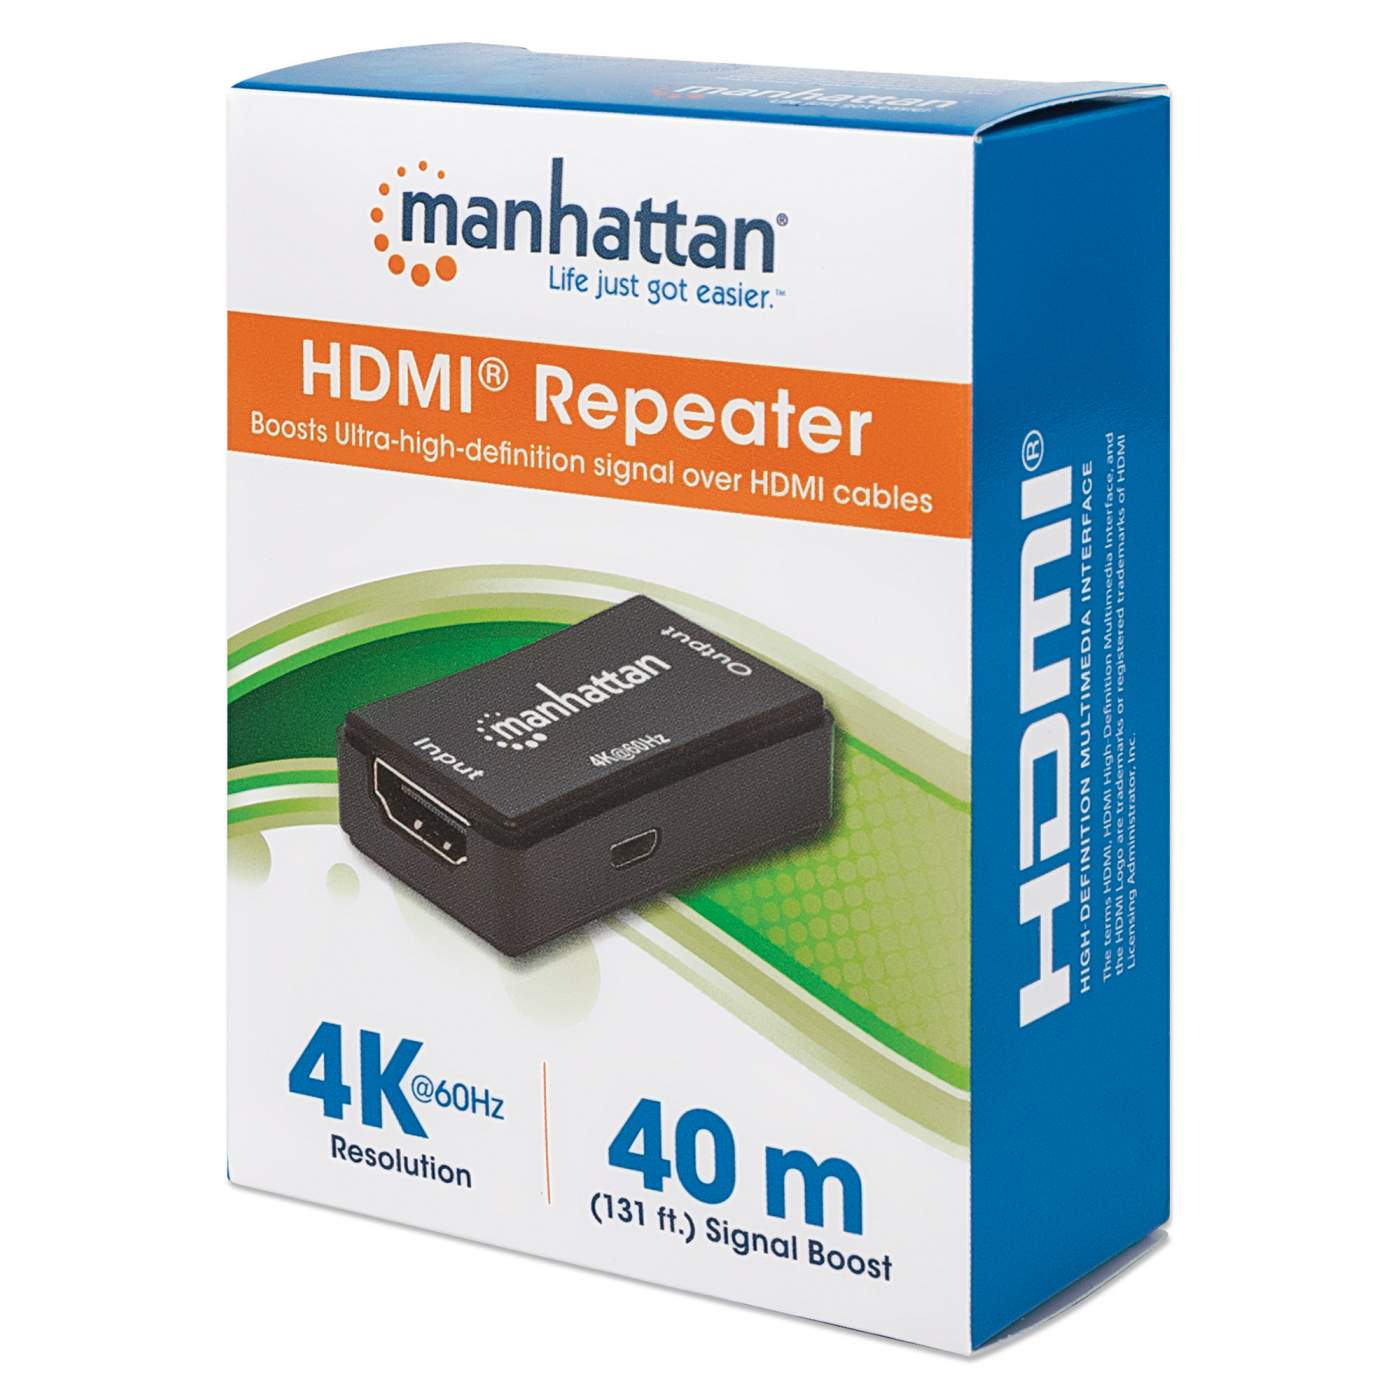 1080p HDMI over Ethernet Extender Kit (207584)